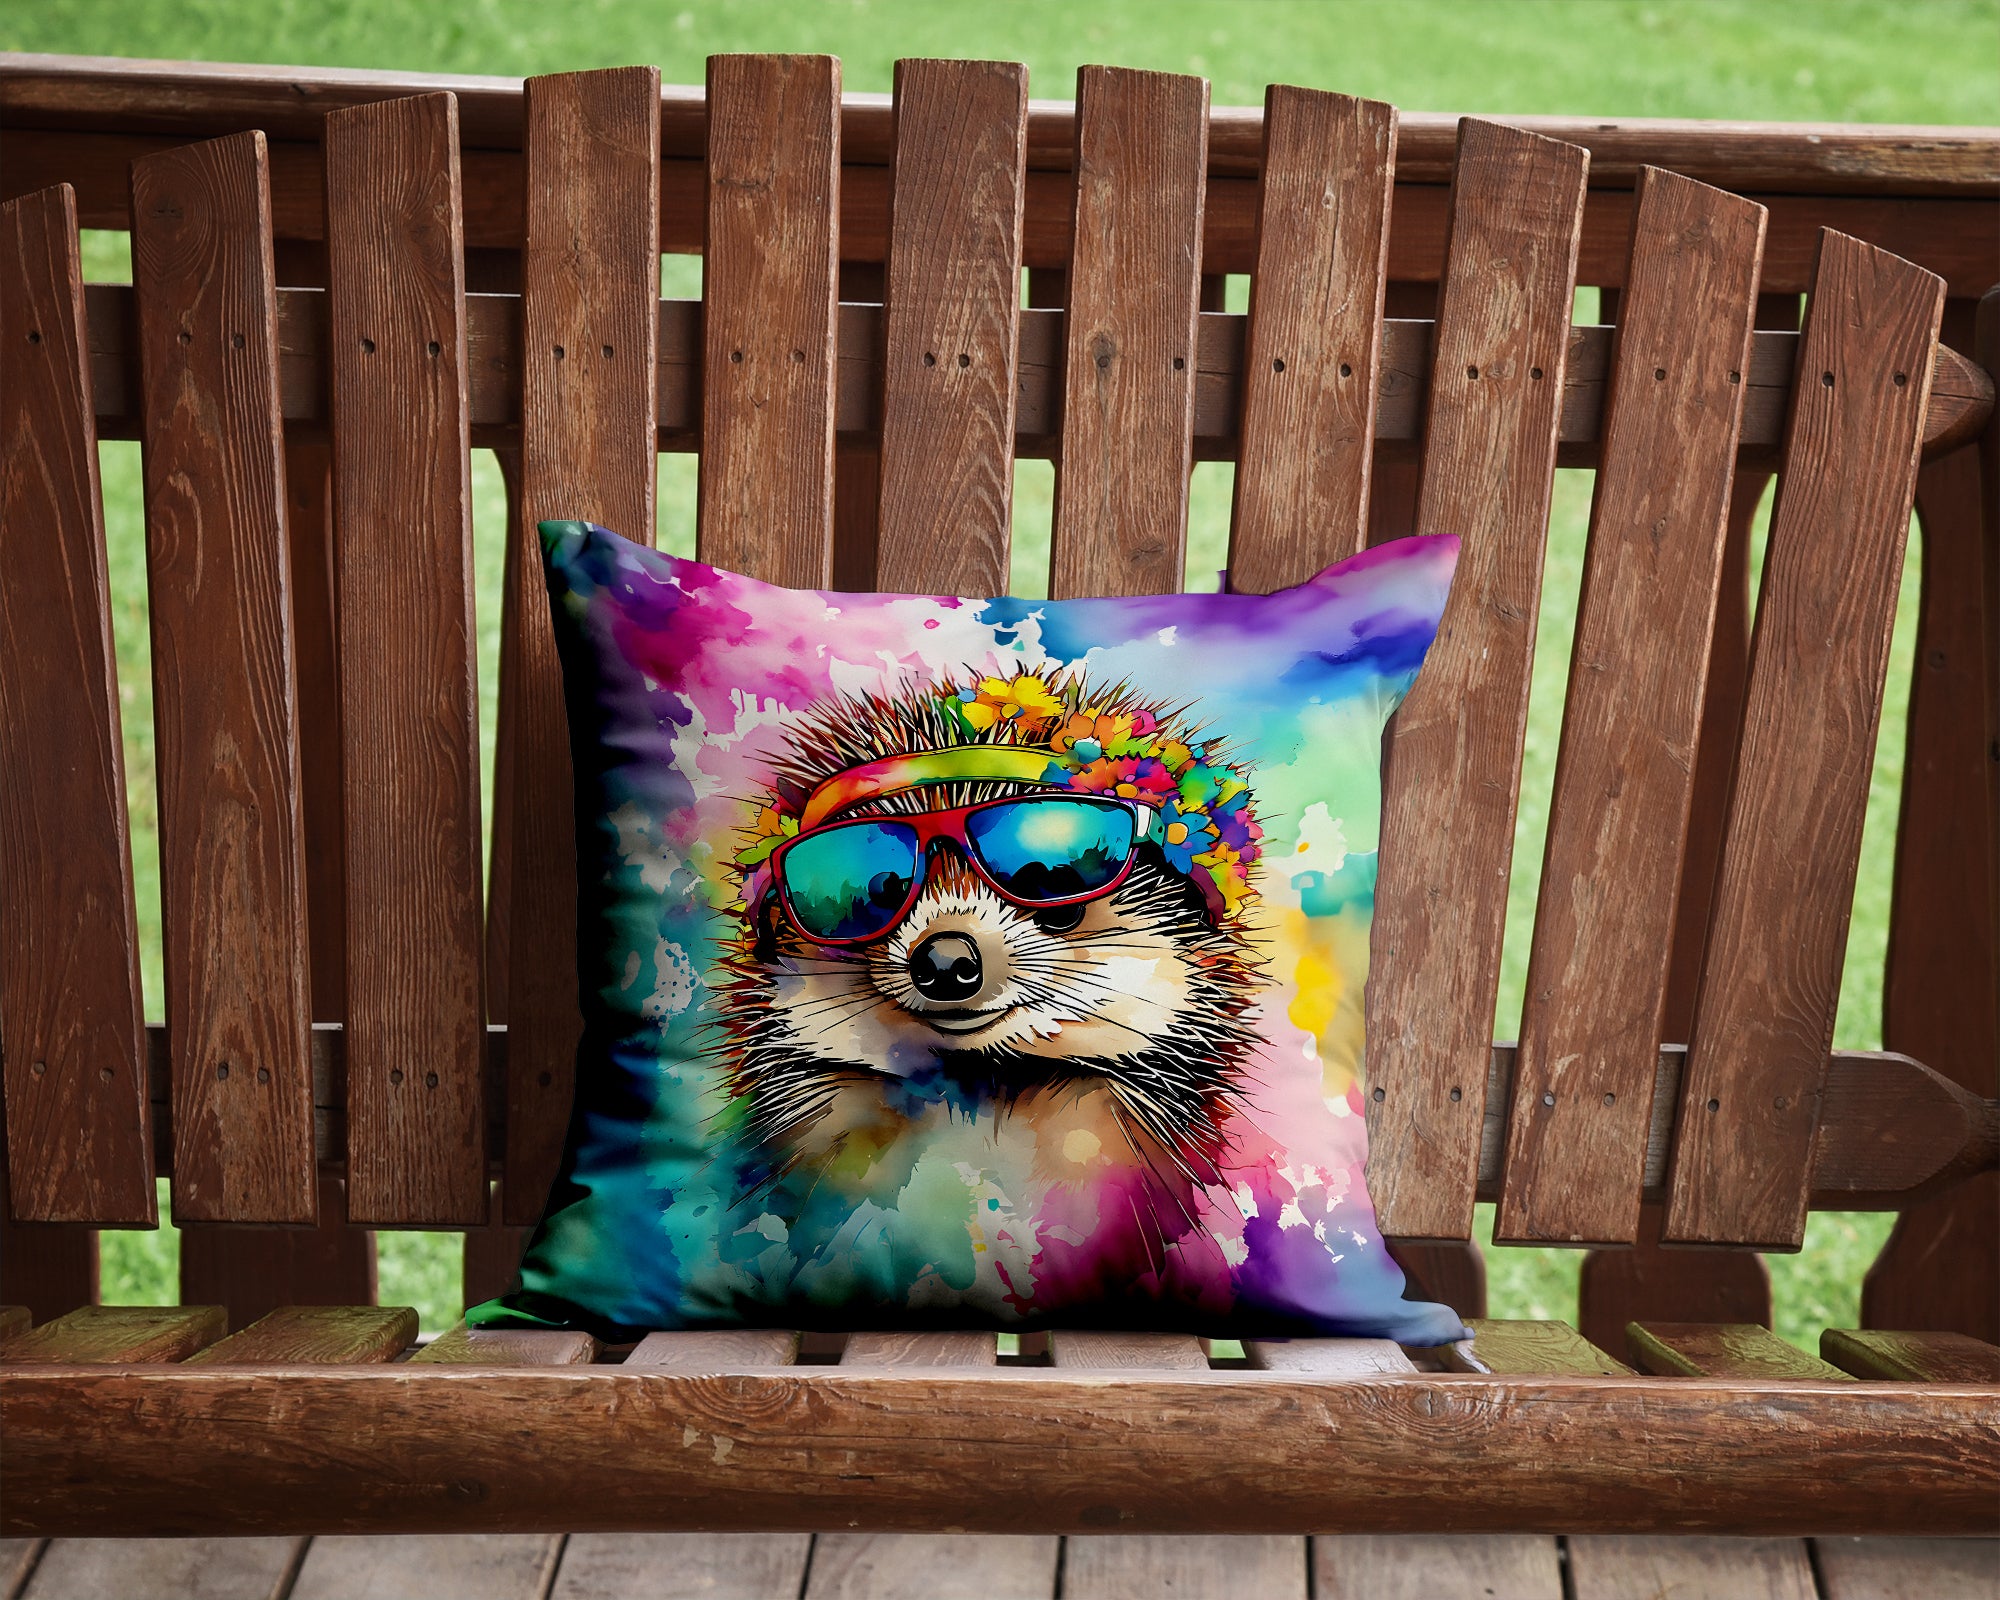 Hippie Animal Hedgehog Throw Pillow